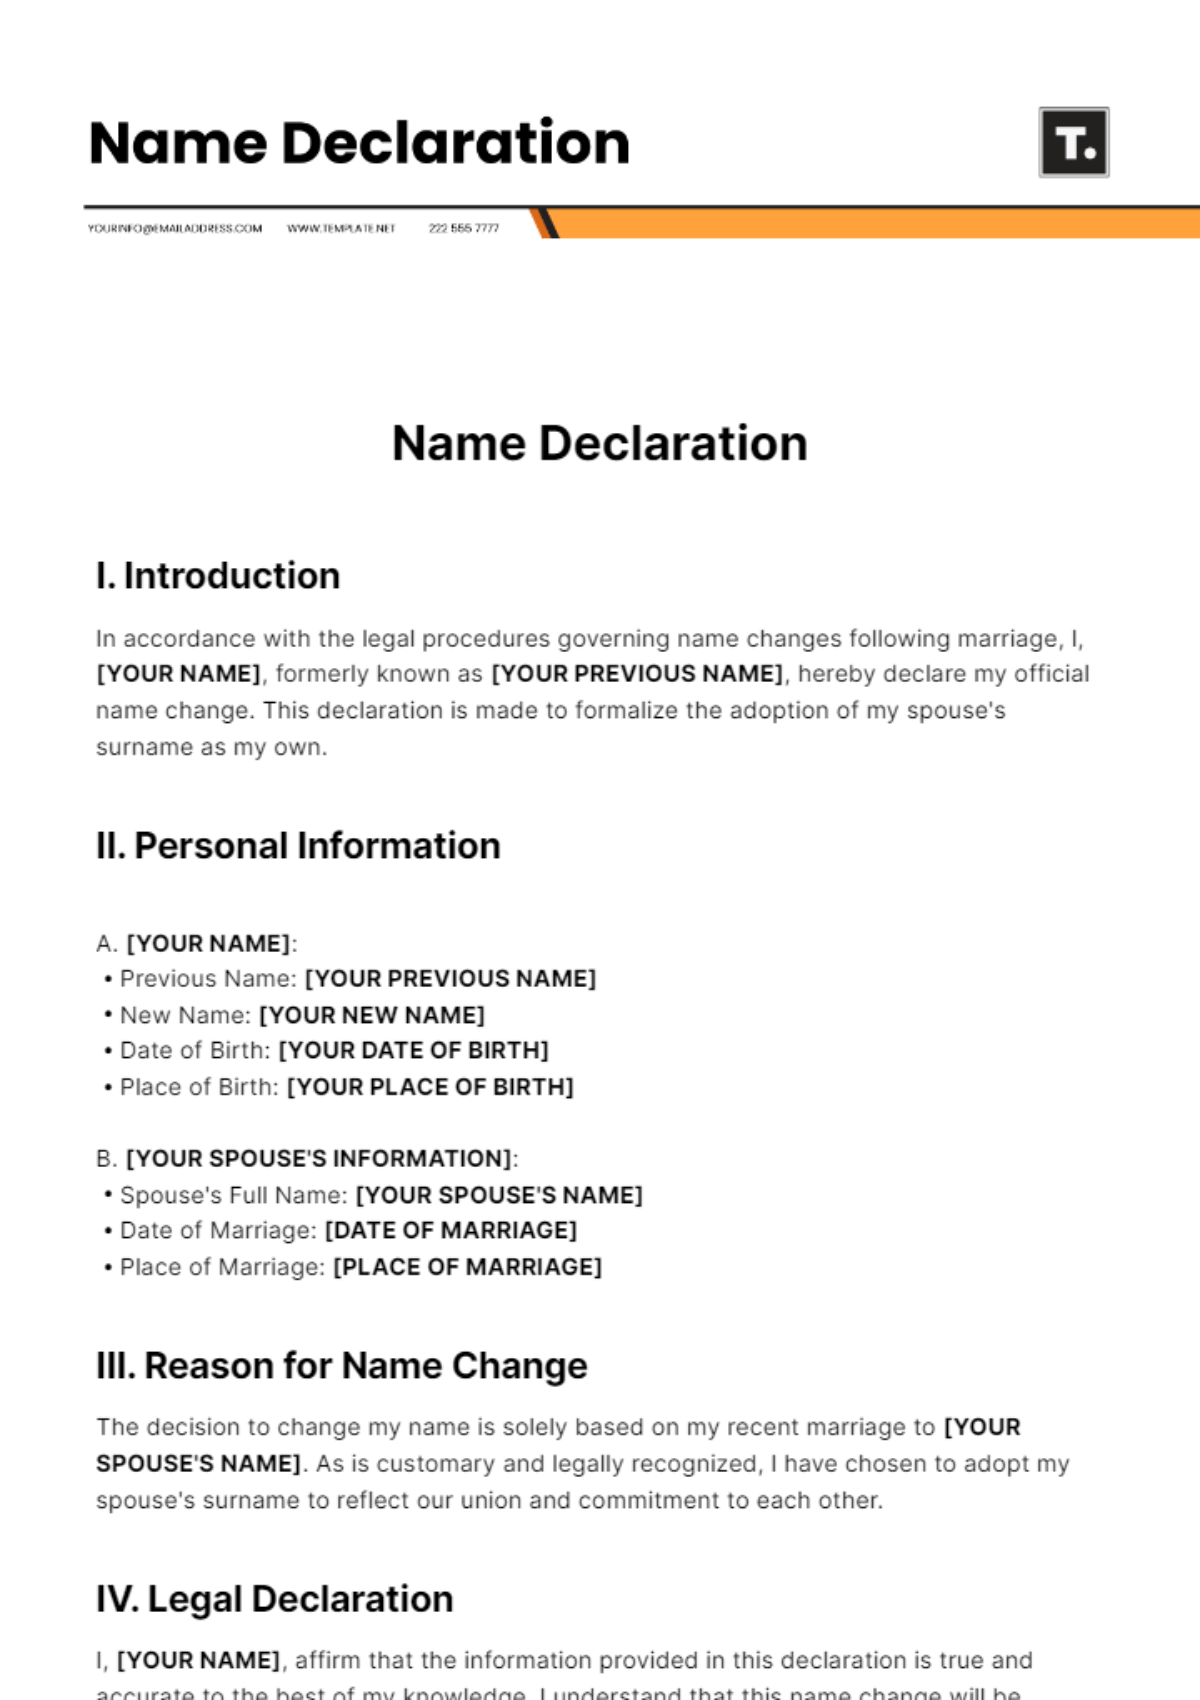 Name Declaration Template